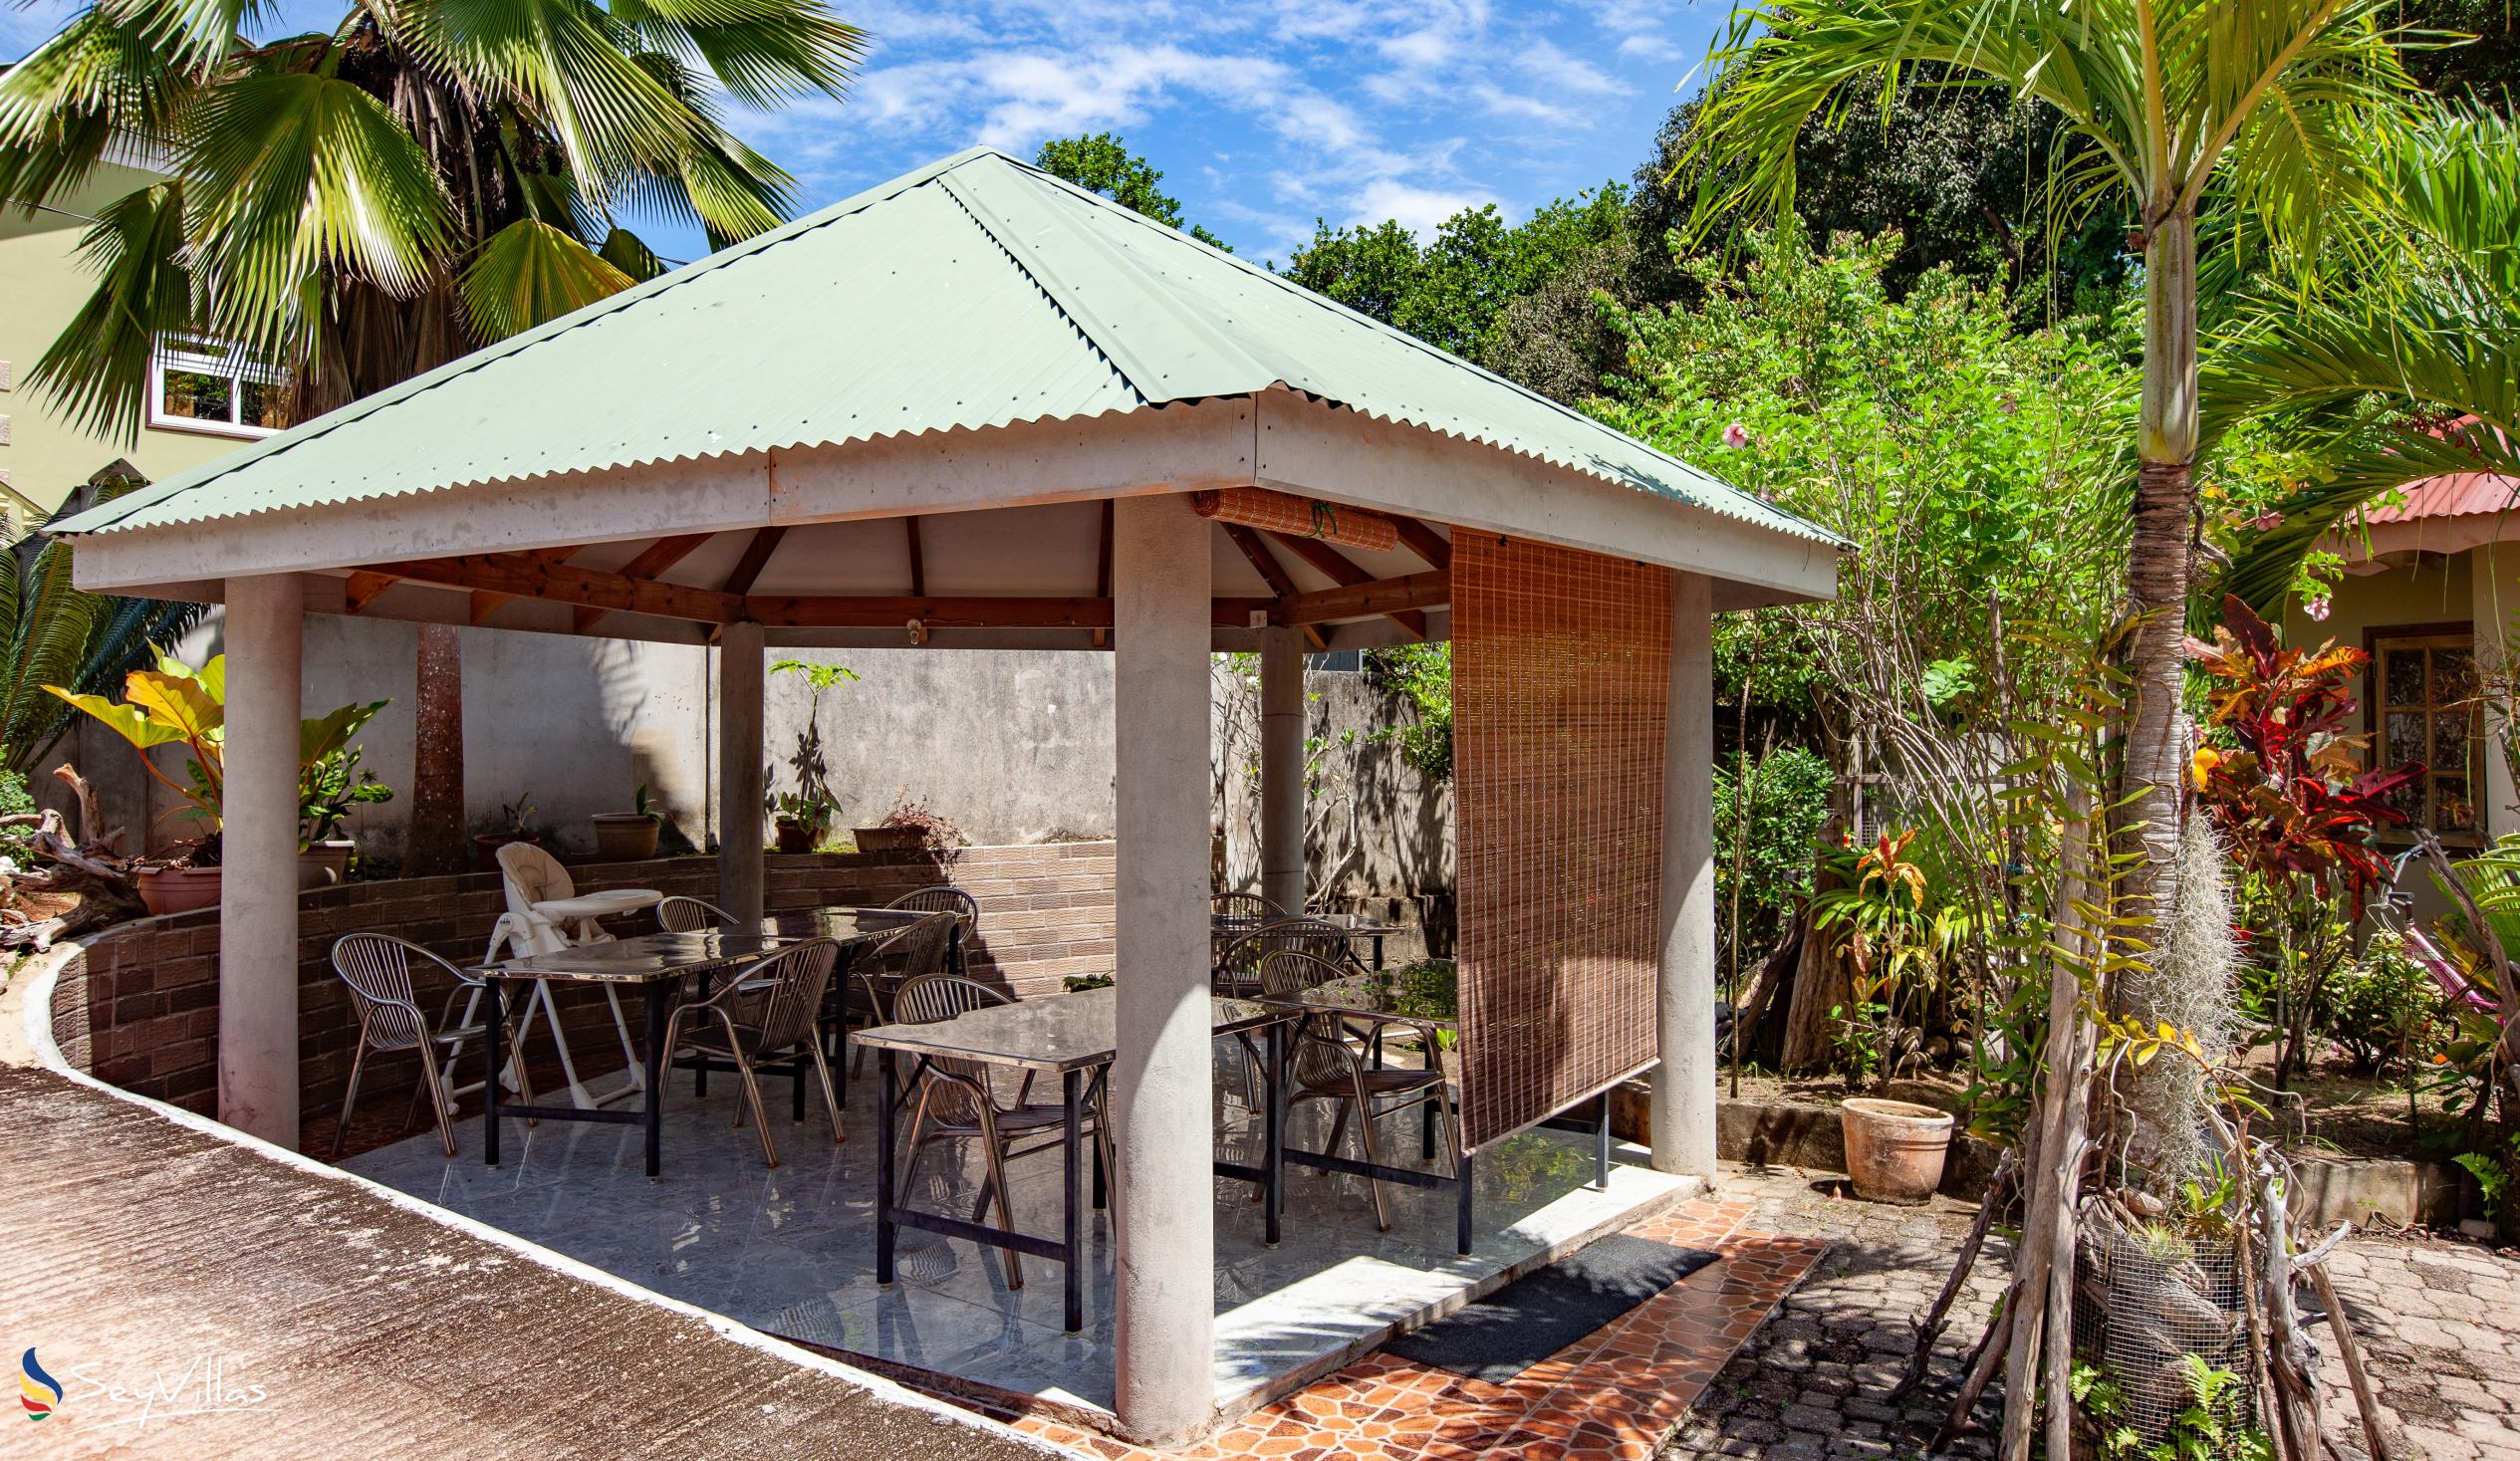 Photo 8: Island Bungalow - Outdoor area - La Digue (Seychelles)